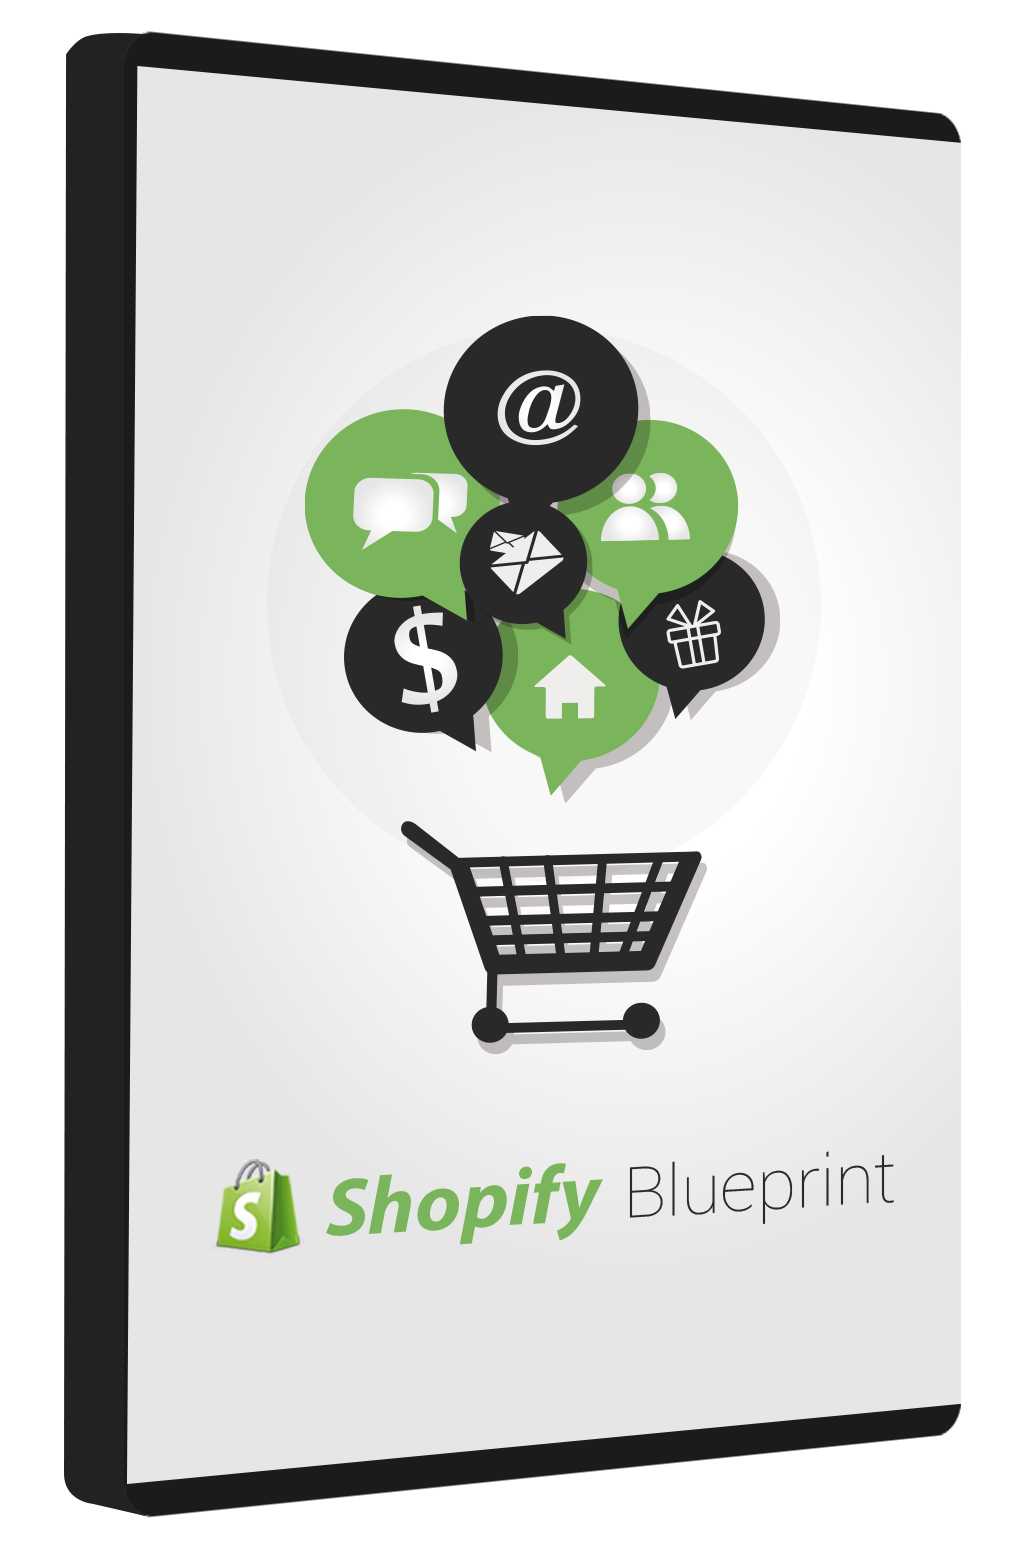 Shopify Blueprint